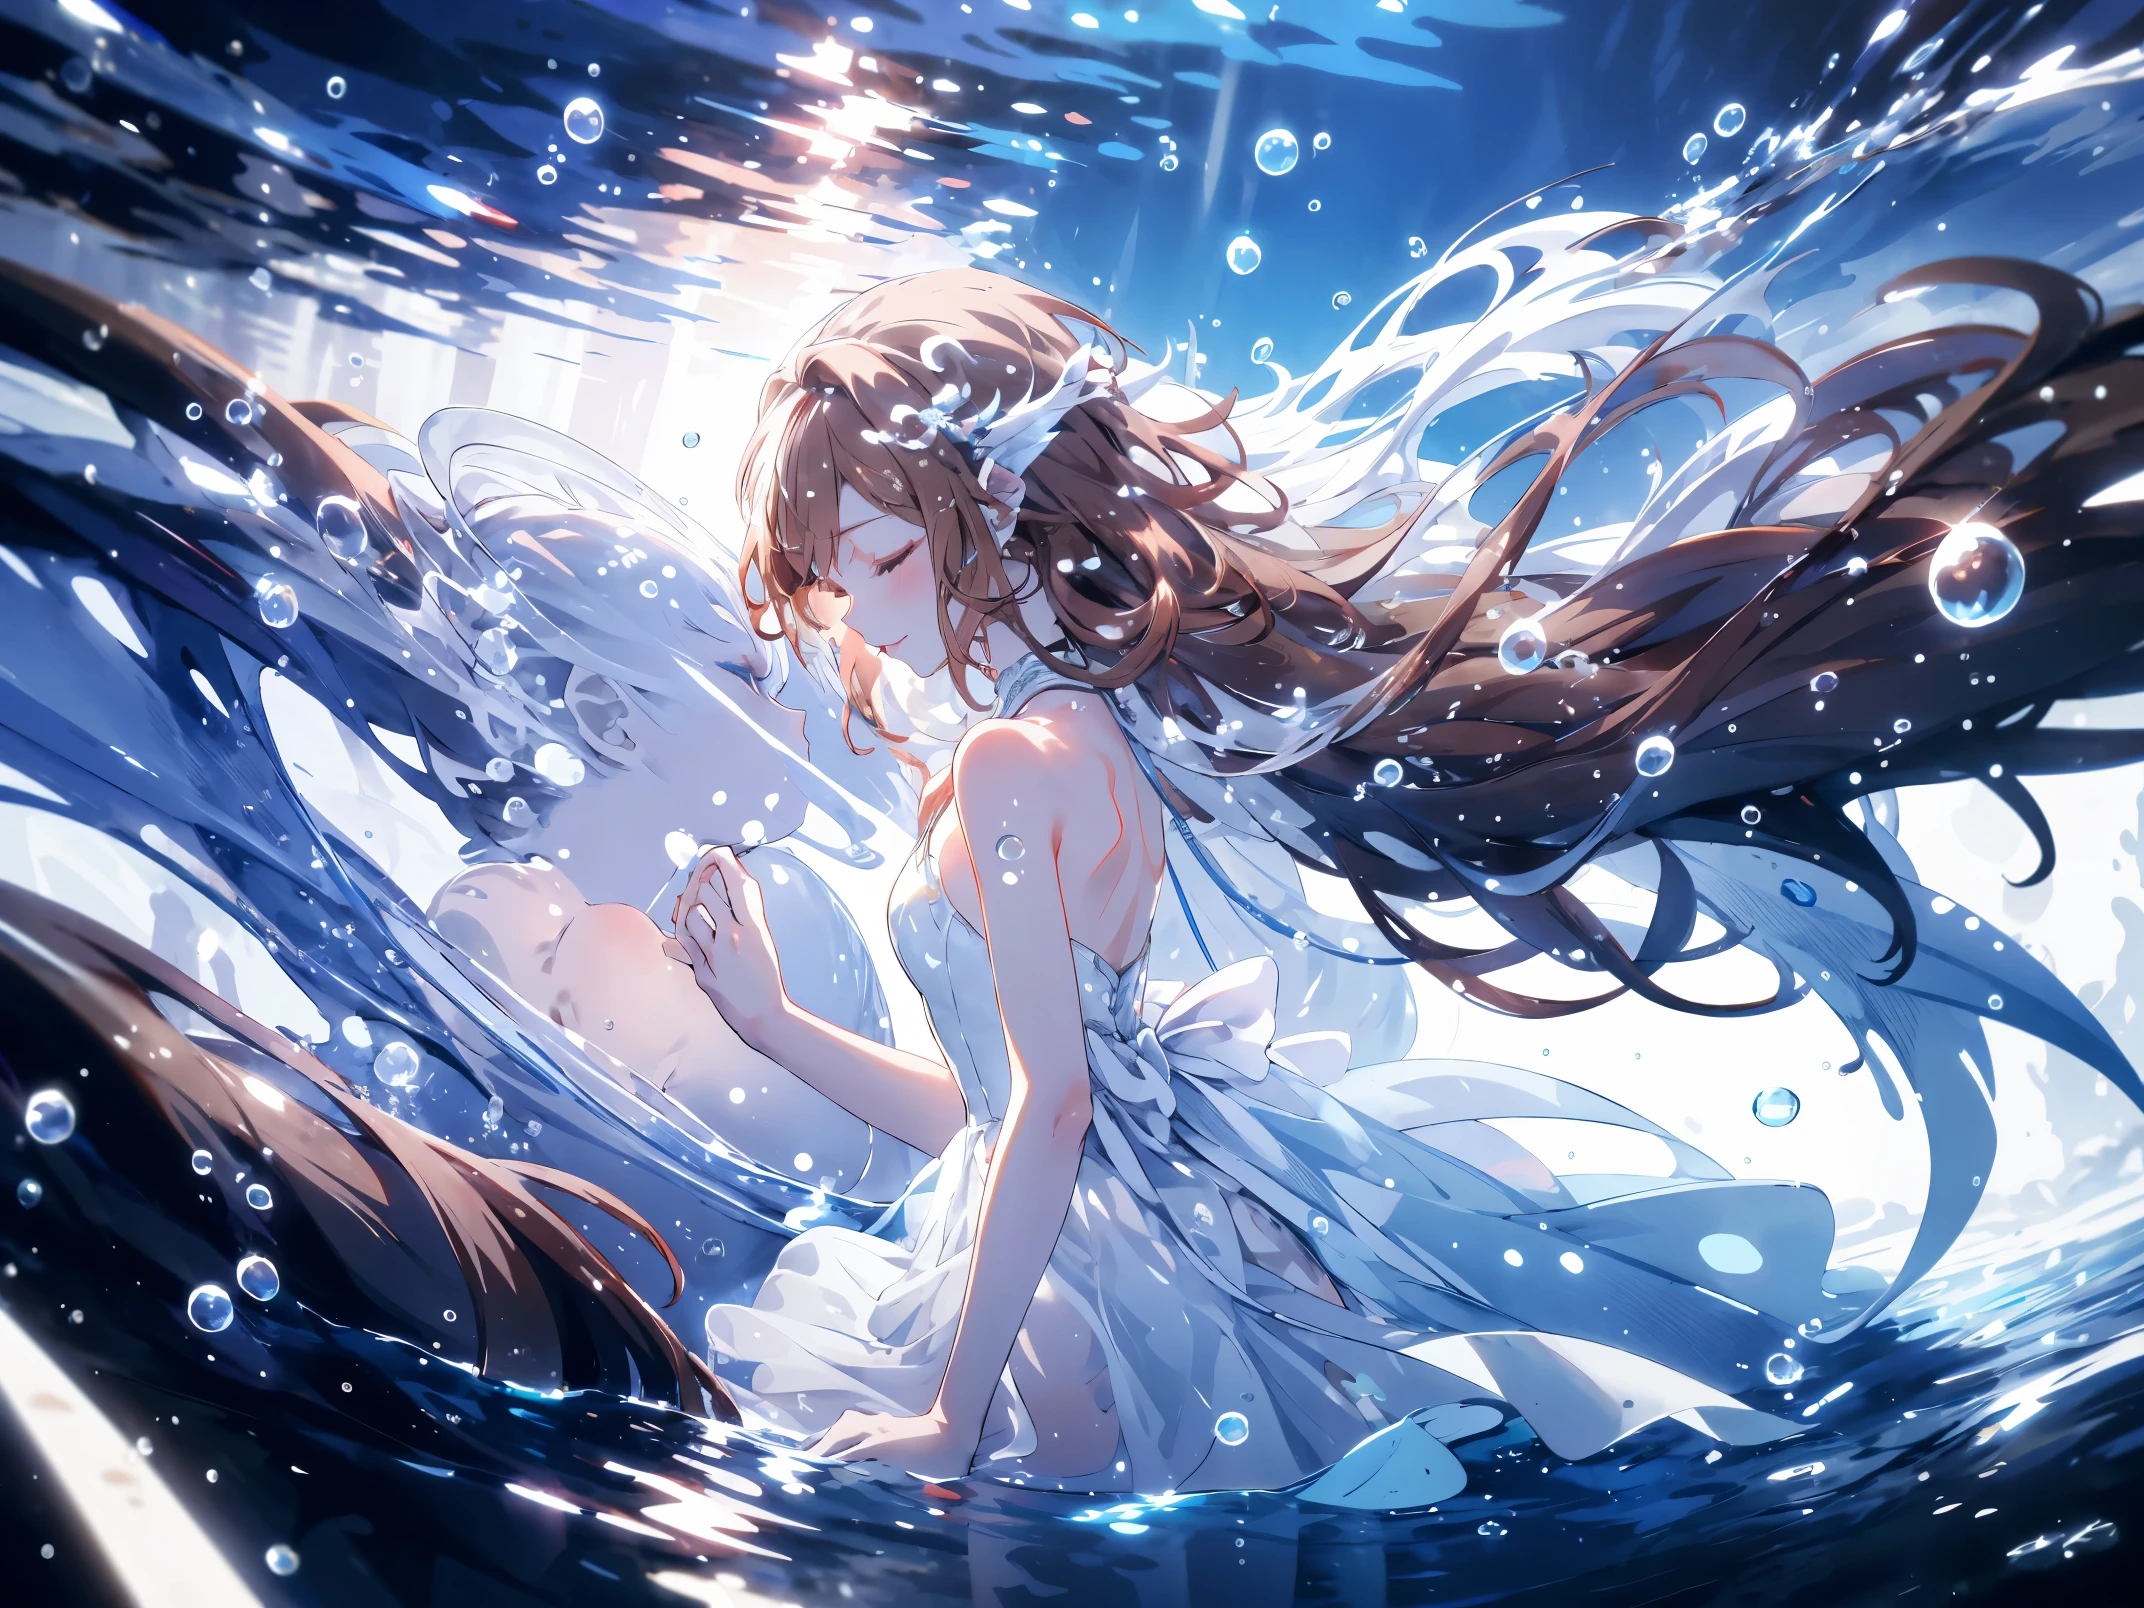 an artwork of a woman in white 裙子 and flowing white hair under water, 1女孩, 裙子, 水下, 独自的, 长发, 闭上眼睛, 棕色的头发, air 气泡, 赤脚, 气泡